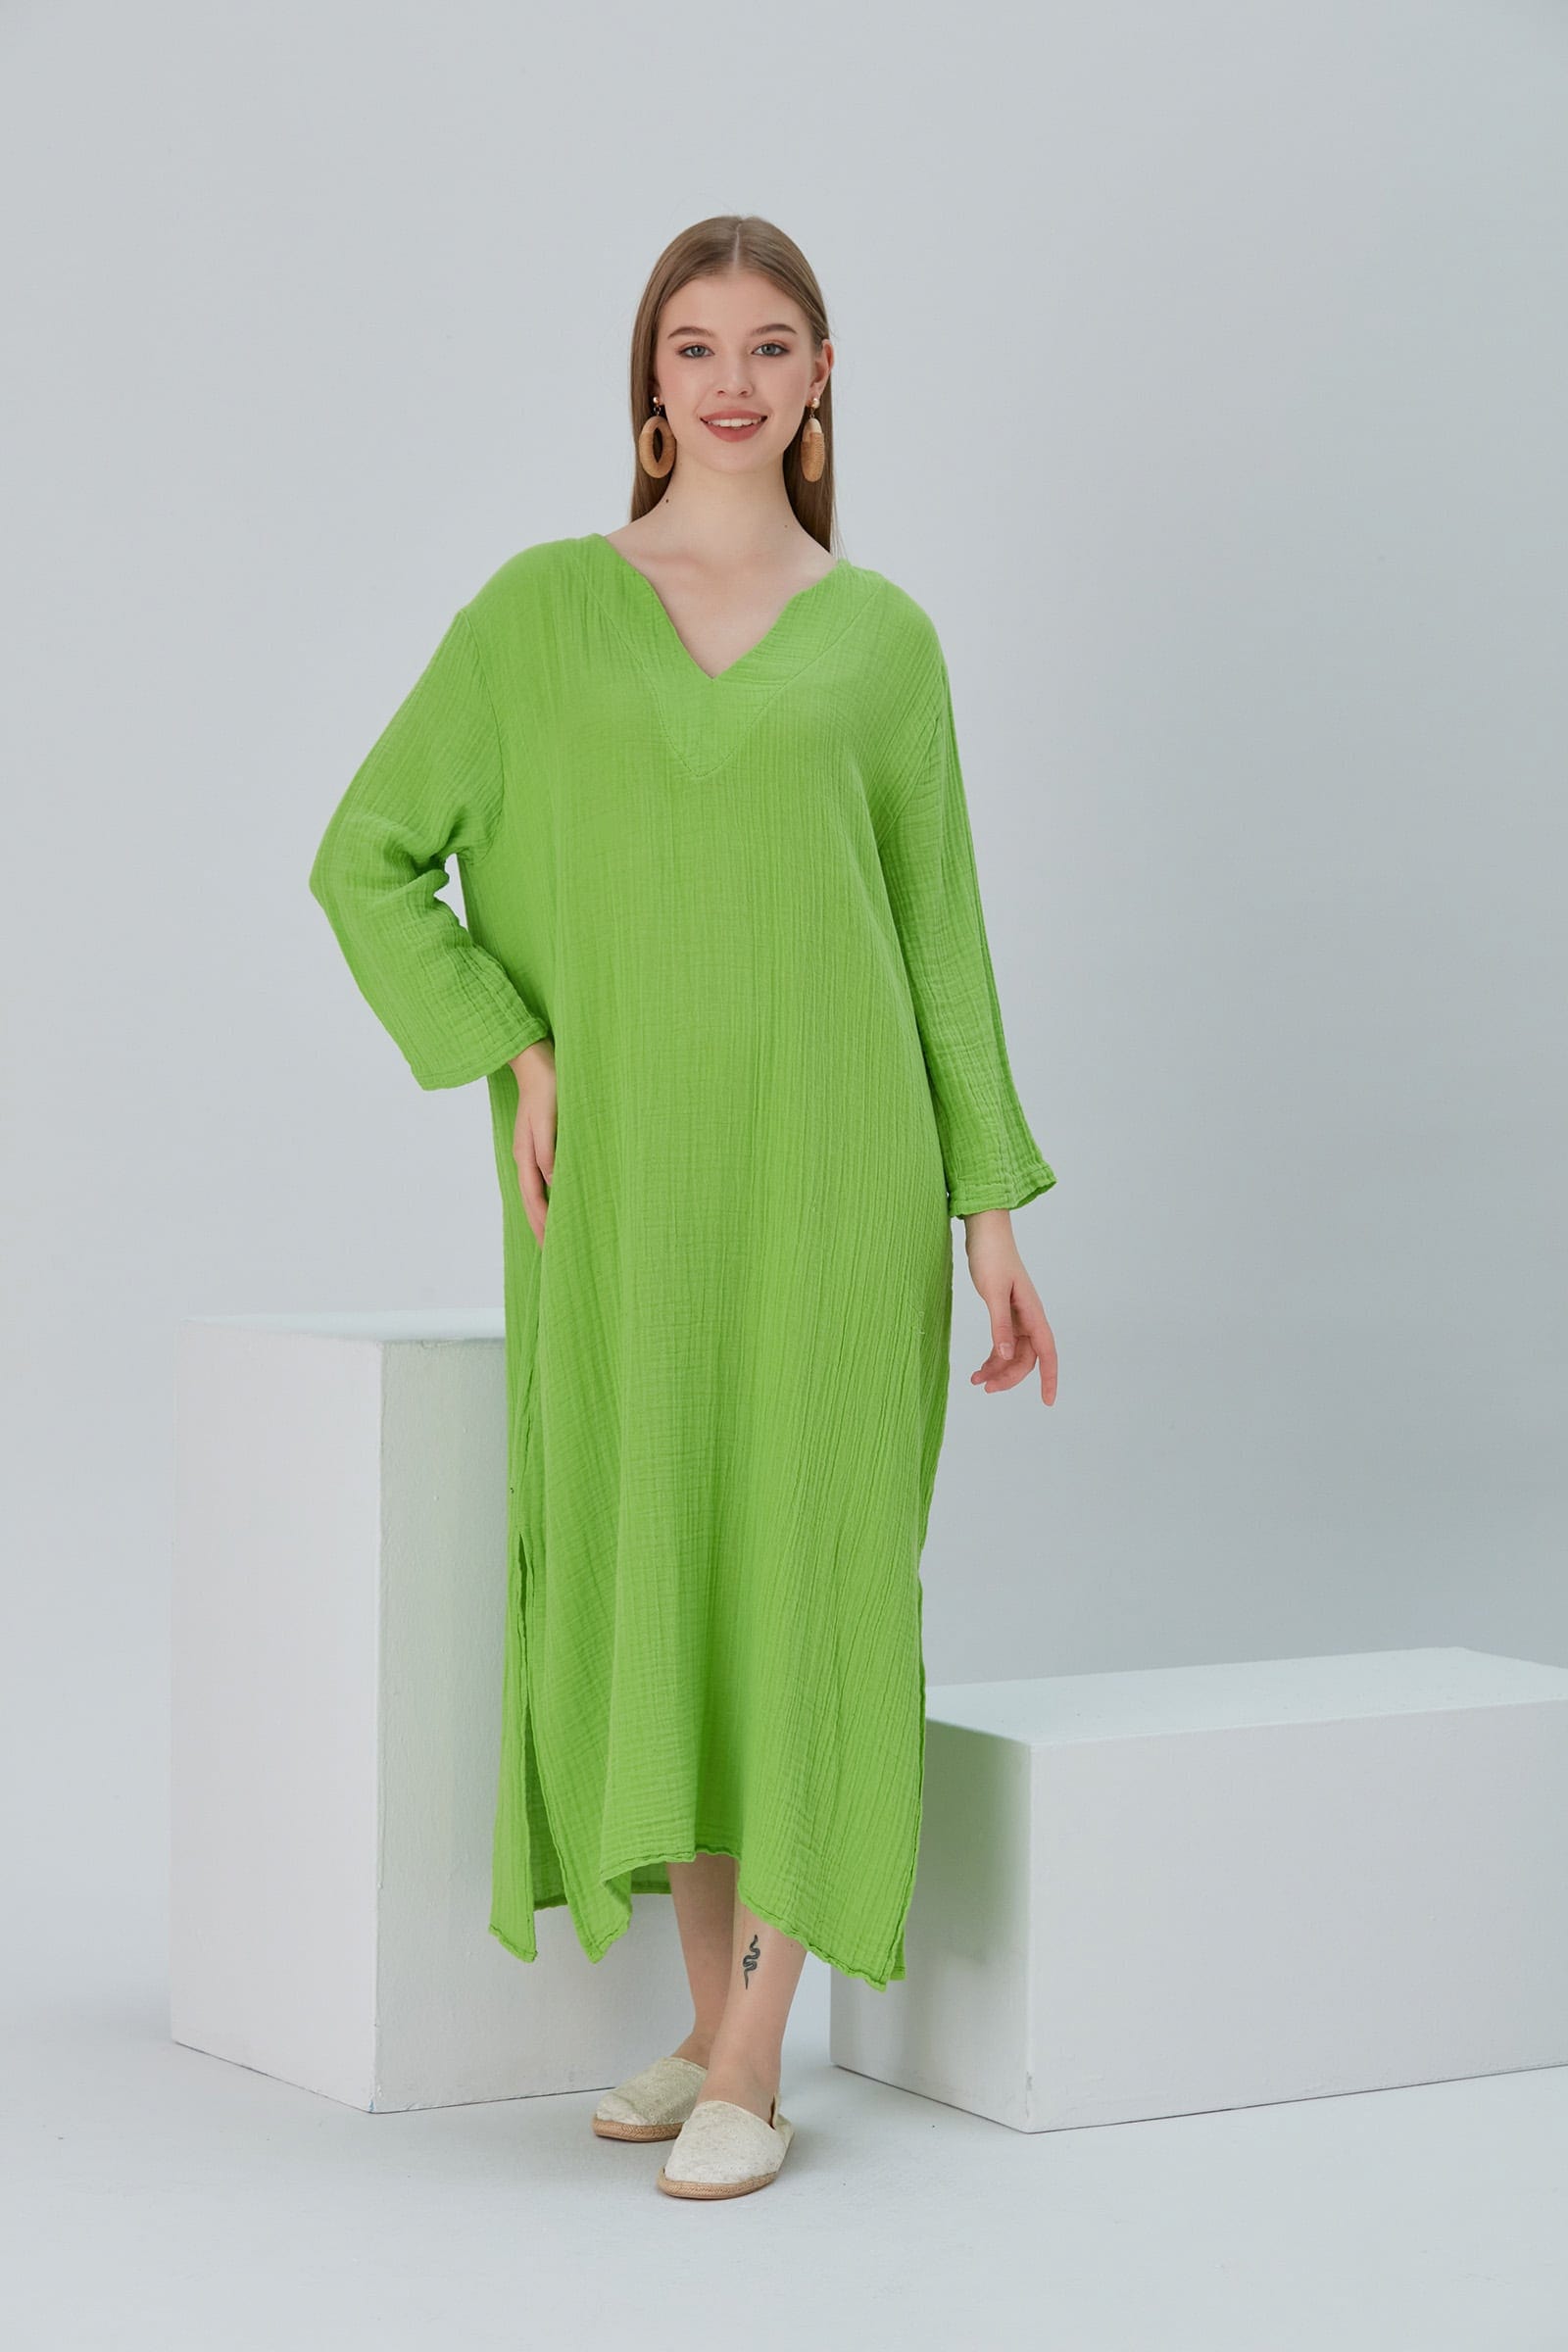 Begonville Maxi Elbise Essentials V Yaka Rahat Uzun Elbise - Fıstık Yeşili